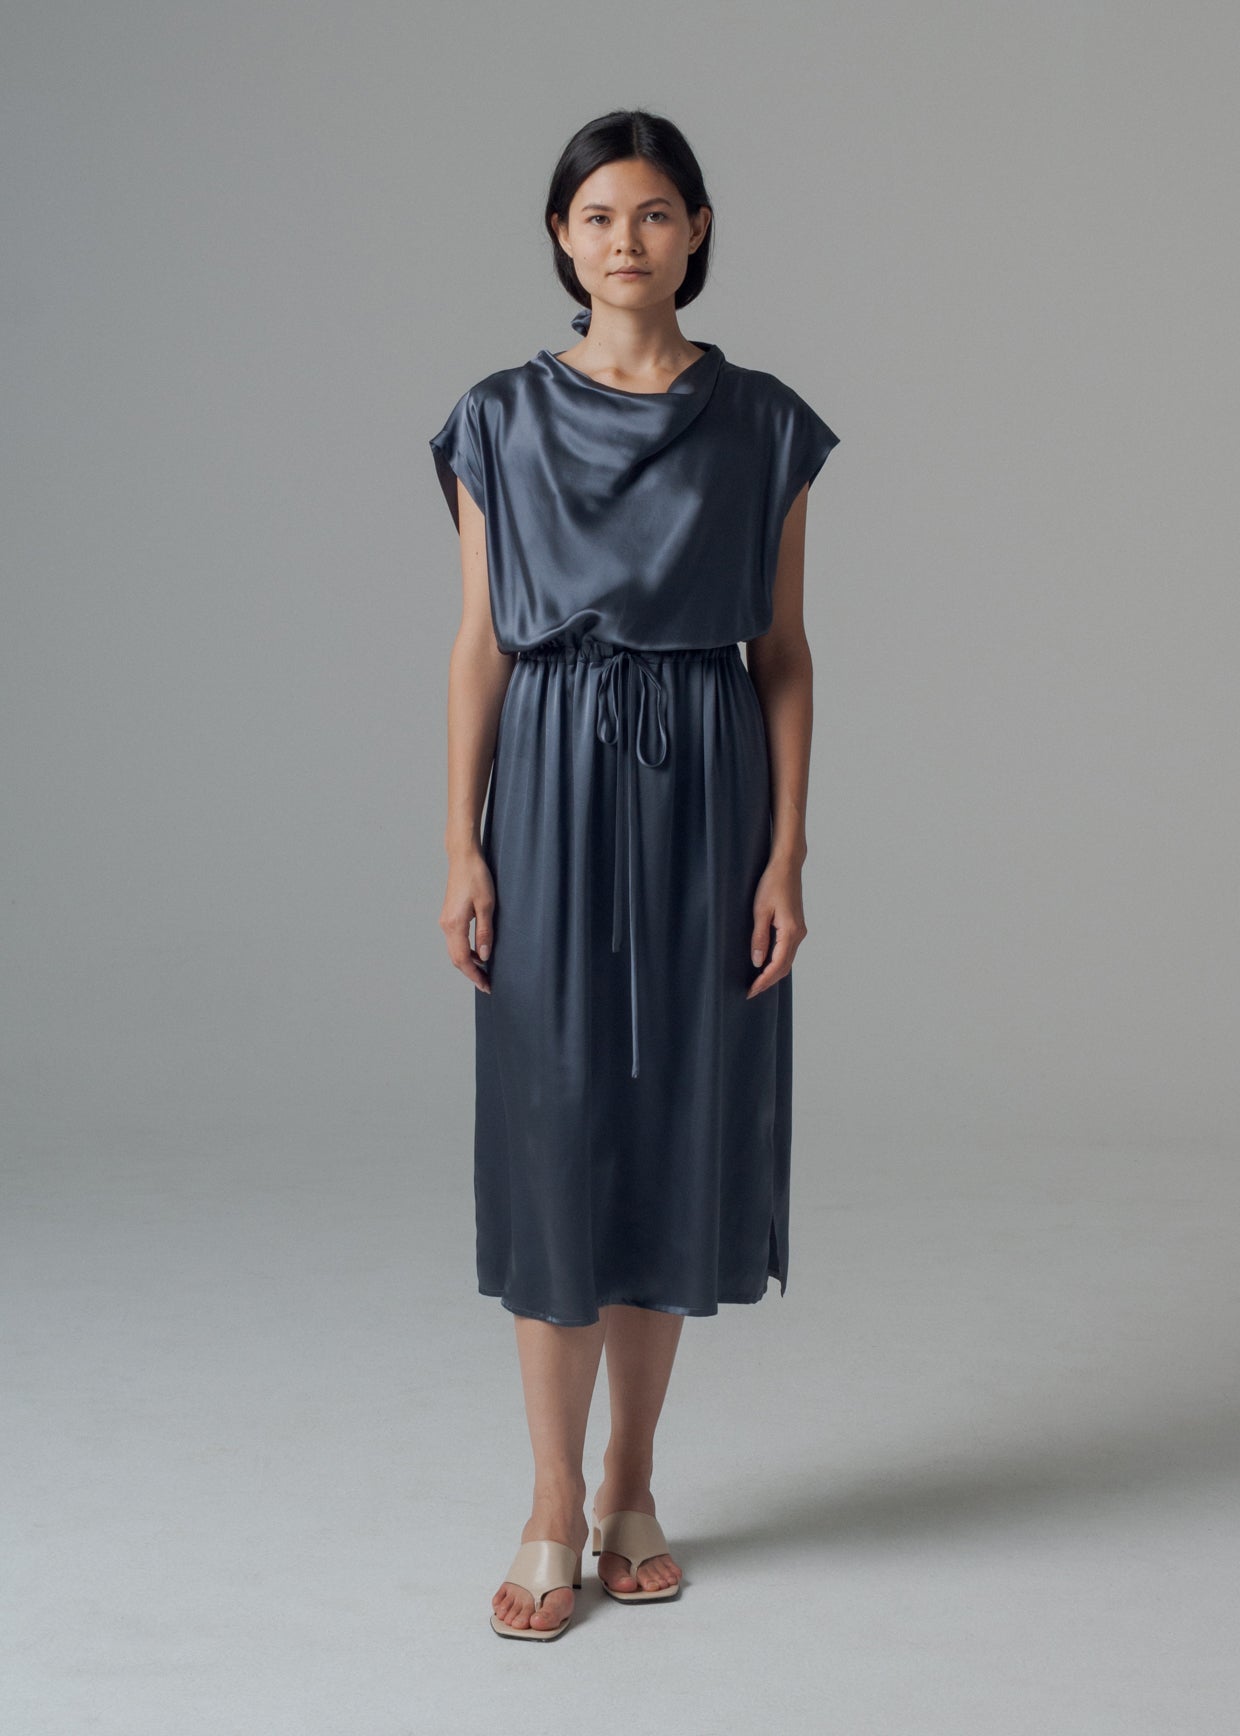 SAMPLE SALE - Astrid Dress in Graphite Silk - SMALL/MEDIUM